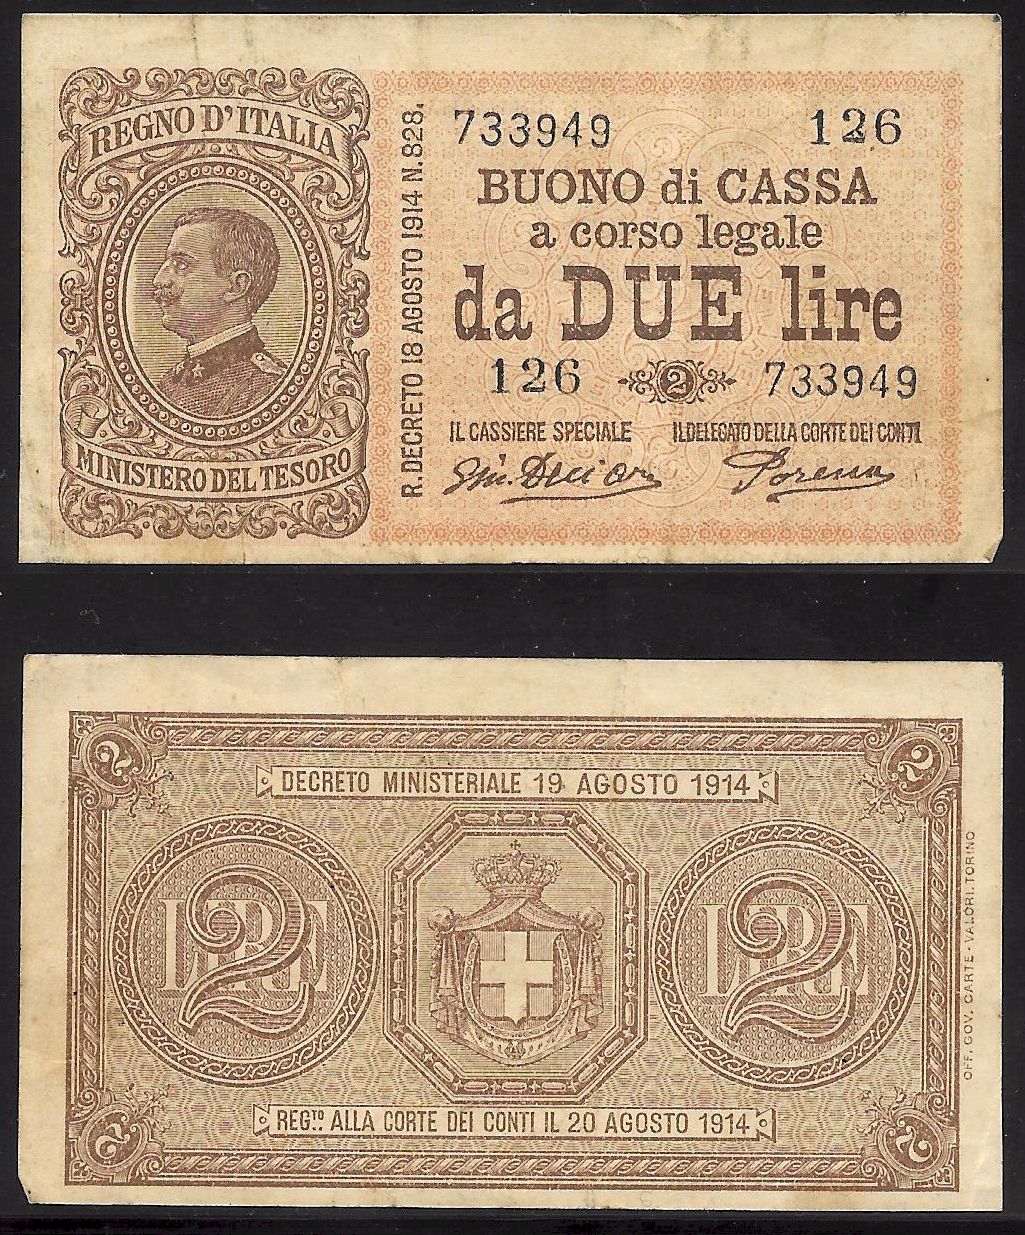 Vittorio Emanuele III - due lire - retro stemma sabaudo - dec. min. 17-10-1921 